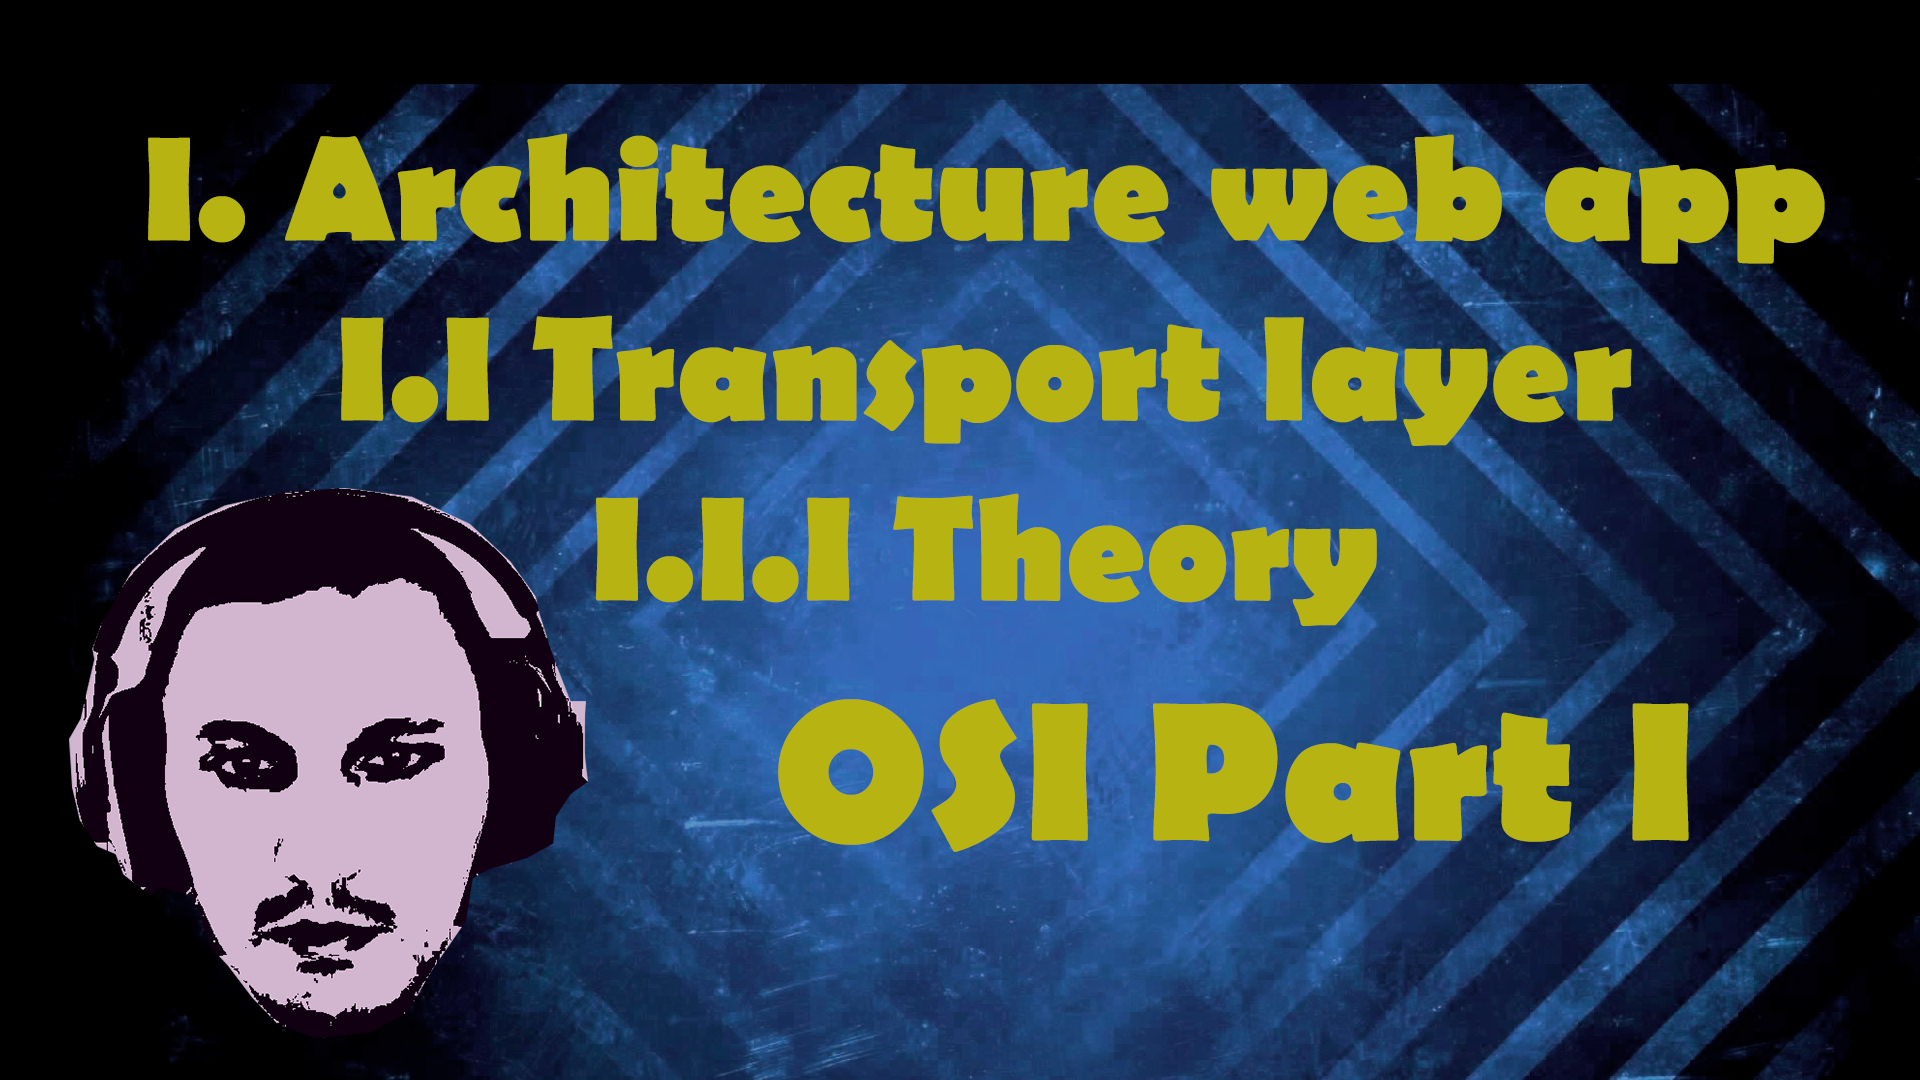 I. Architecture web app I.I Transport layer I.I.I Theory - OSI Part I